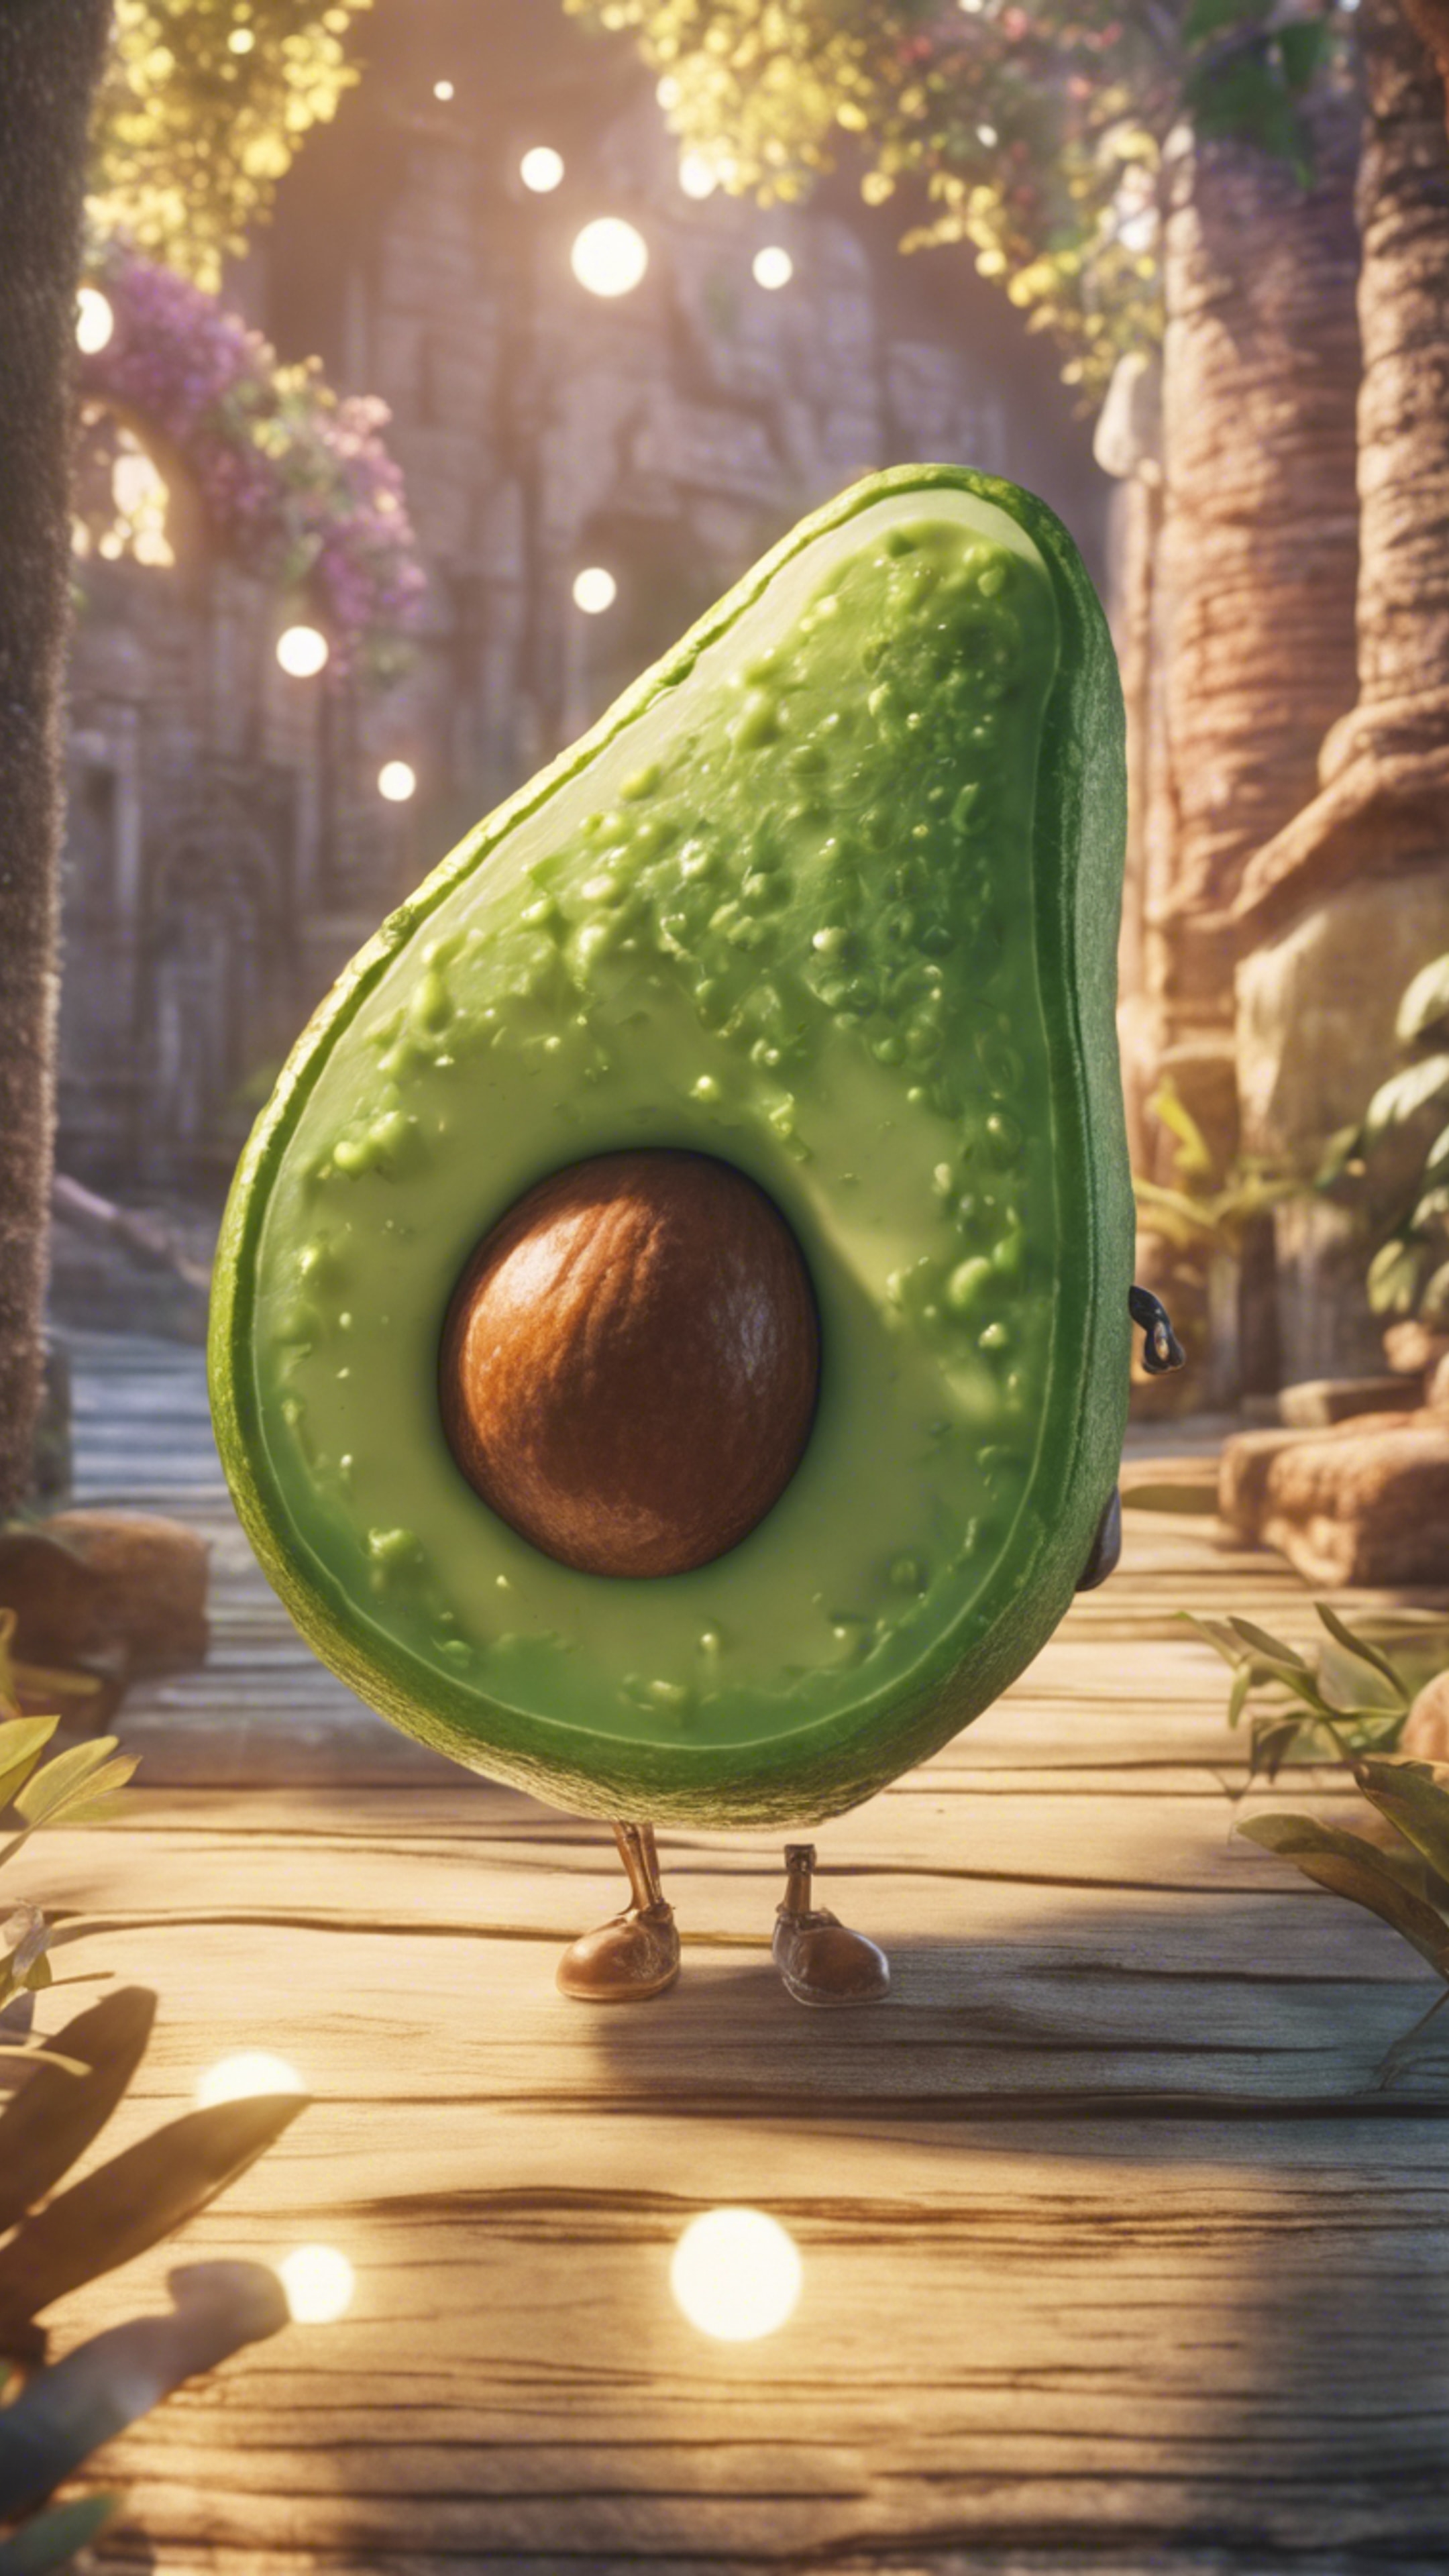 A manga-style scene of an avocado on a magical journey Тапет[452ab1c8ad254f0b95e7]